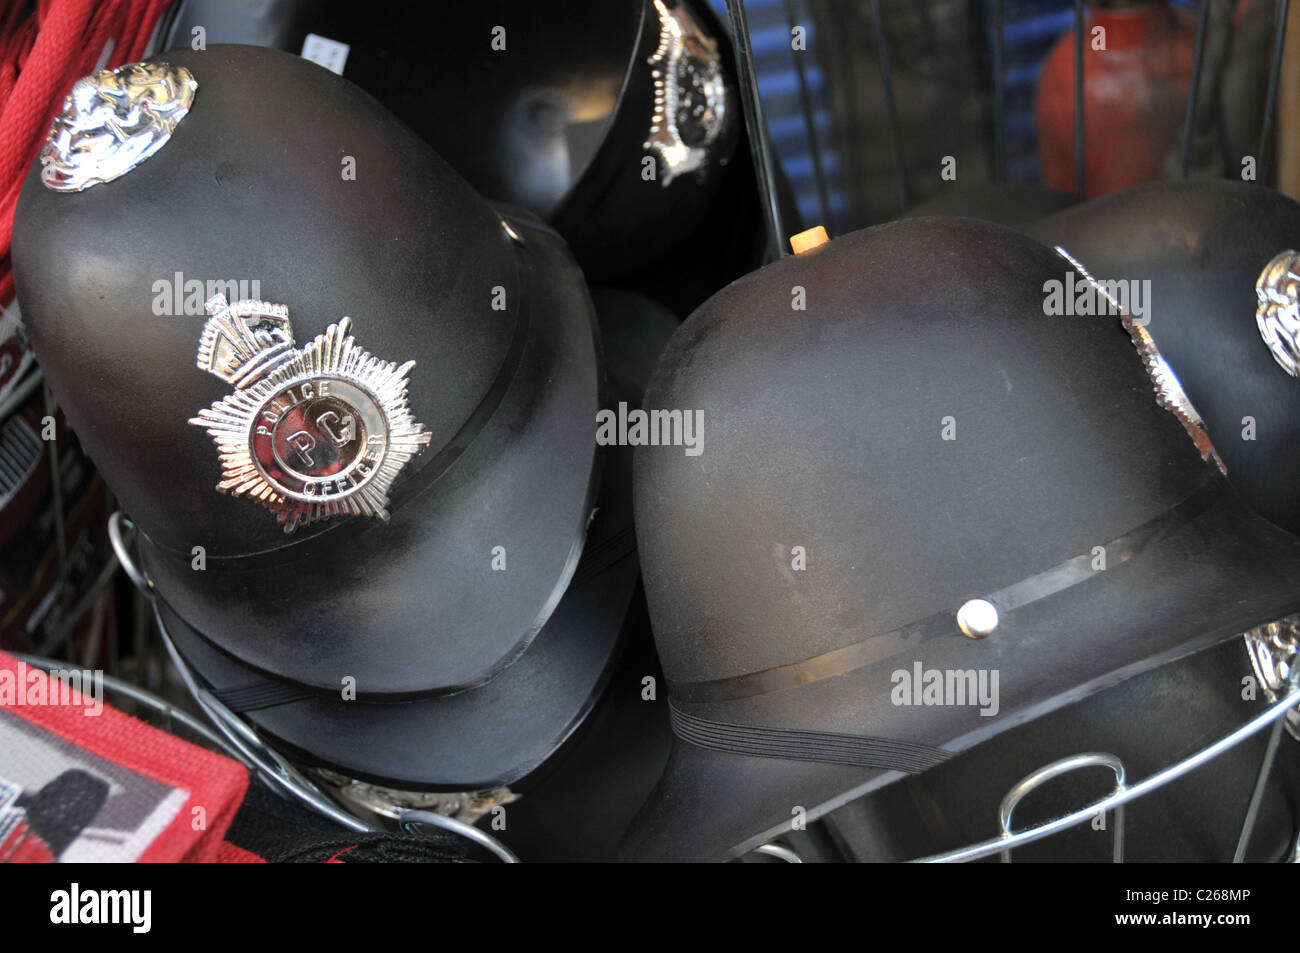 Plastic policeman helmets bobbies joke tourist gifts tourism London Stock Photo